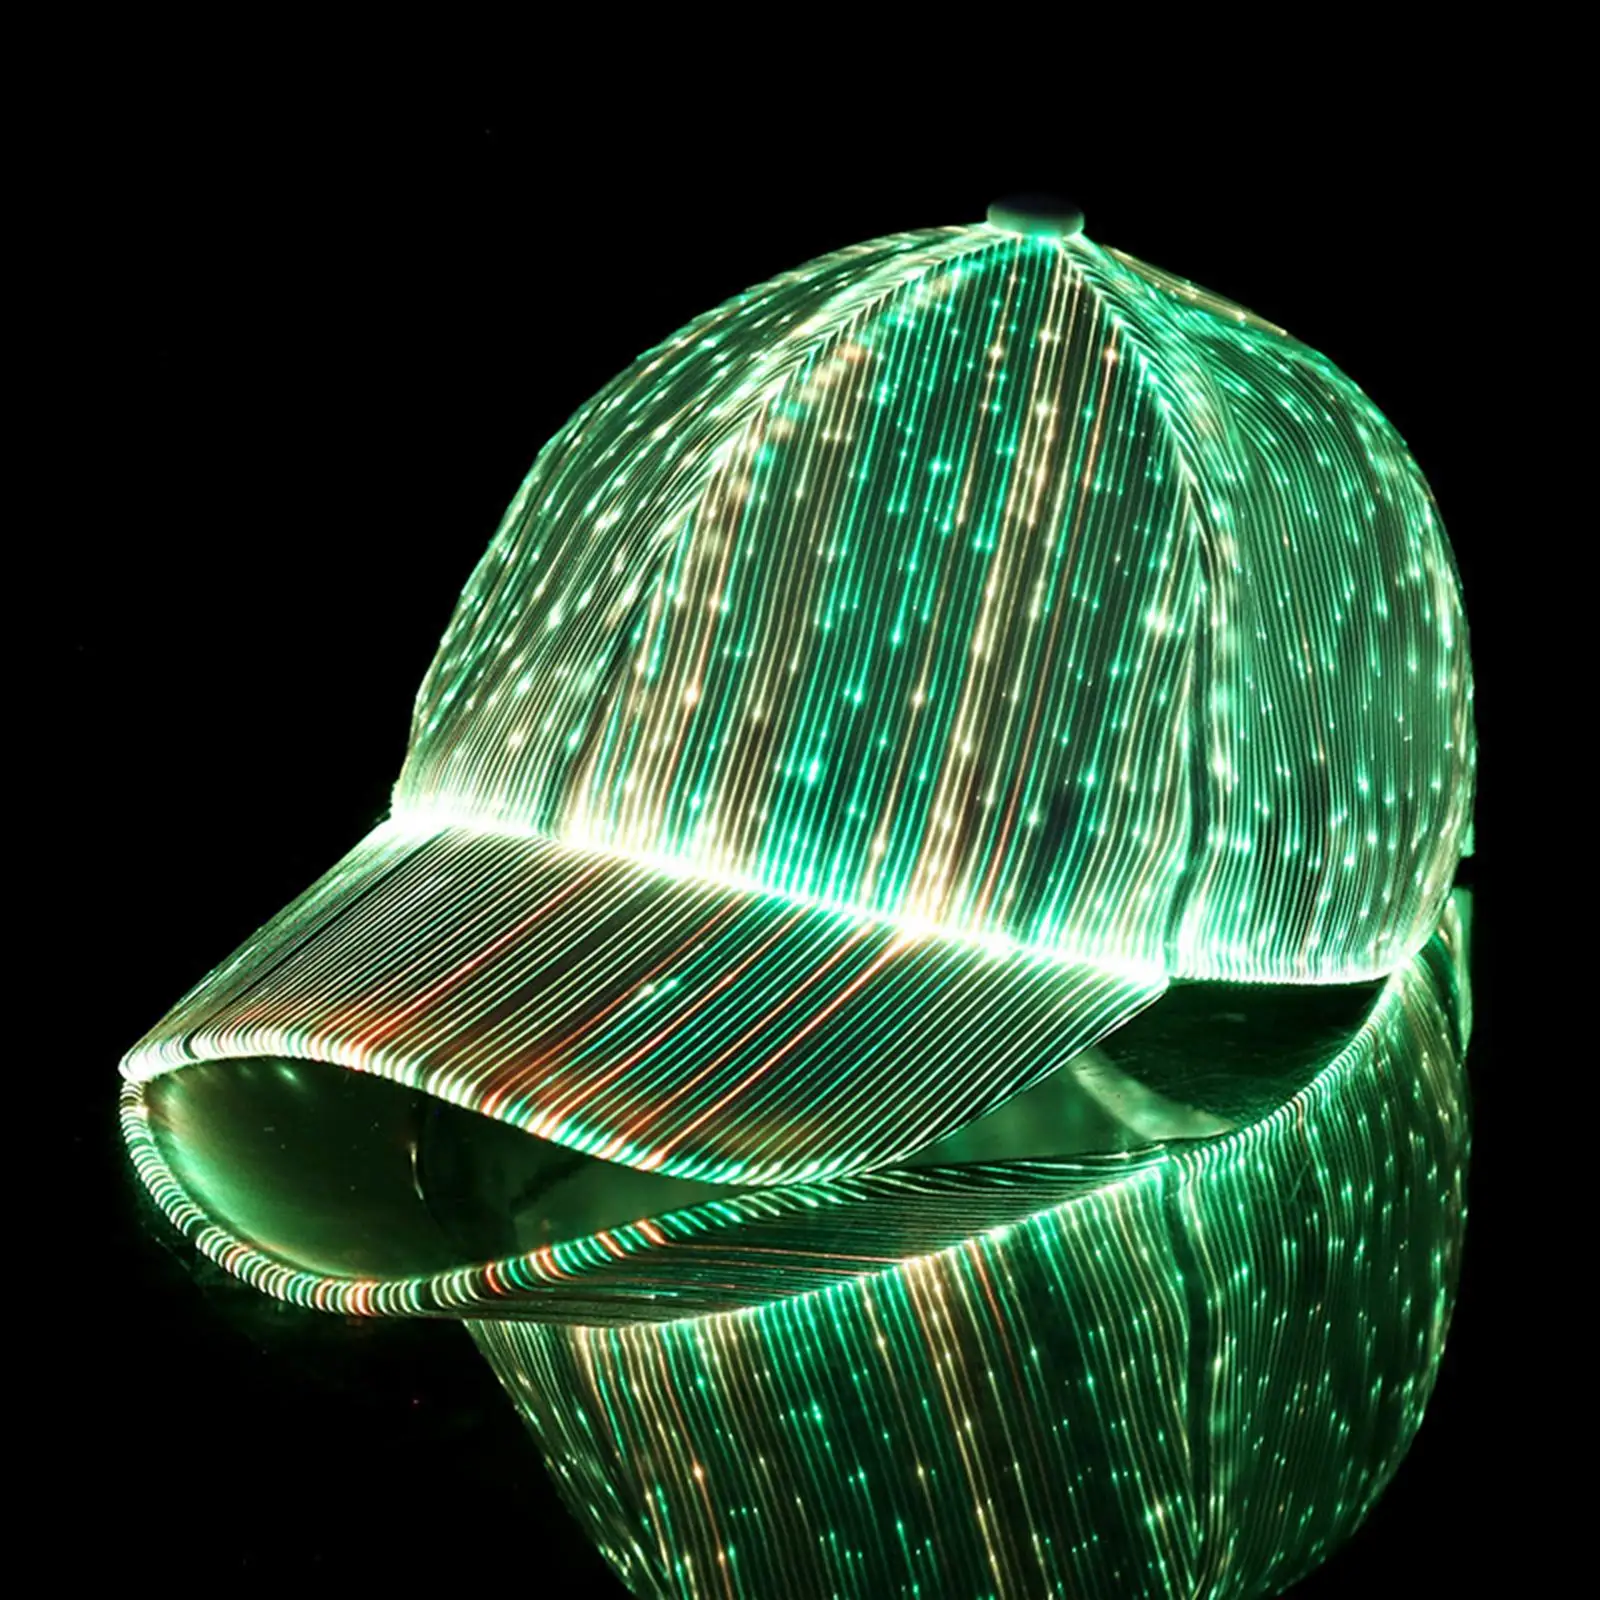 11 Color Flhing Led Fiber Optic Hat Night Light Ccert Glowing Hat Beball Caps